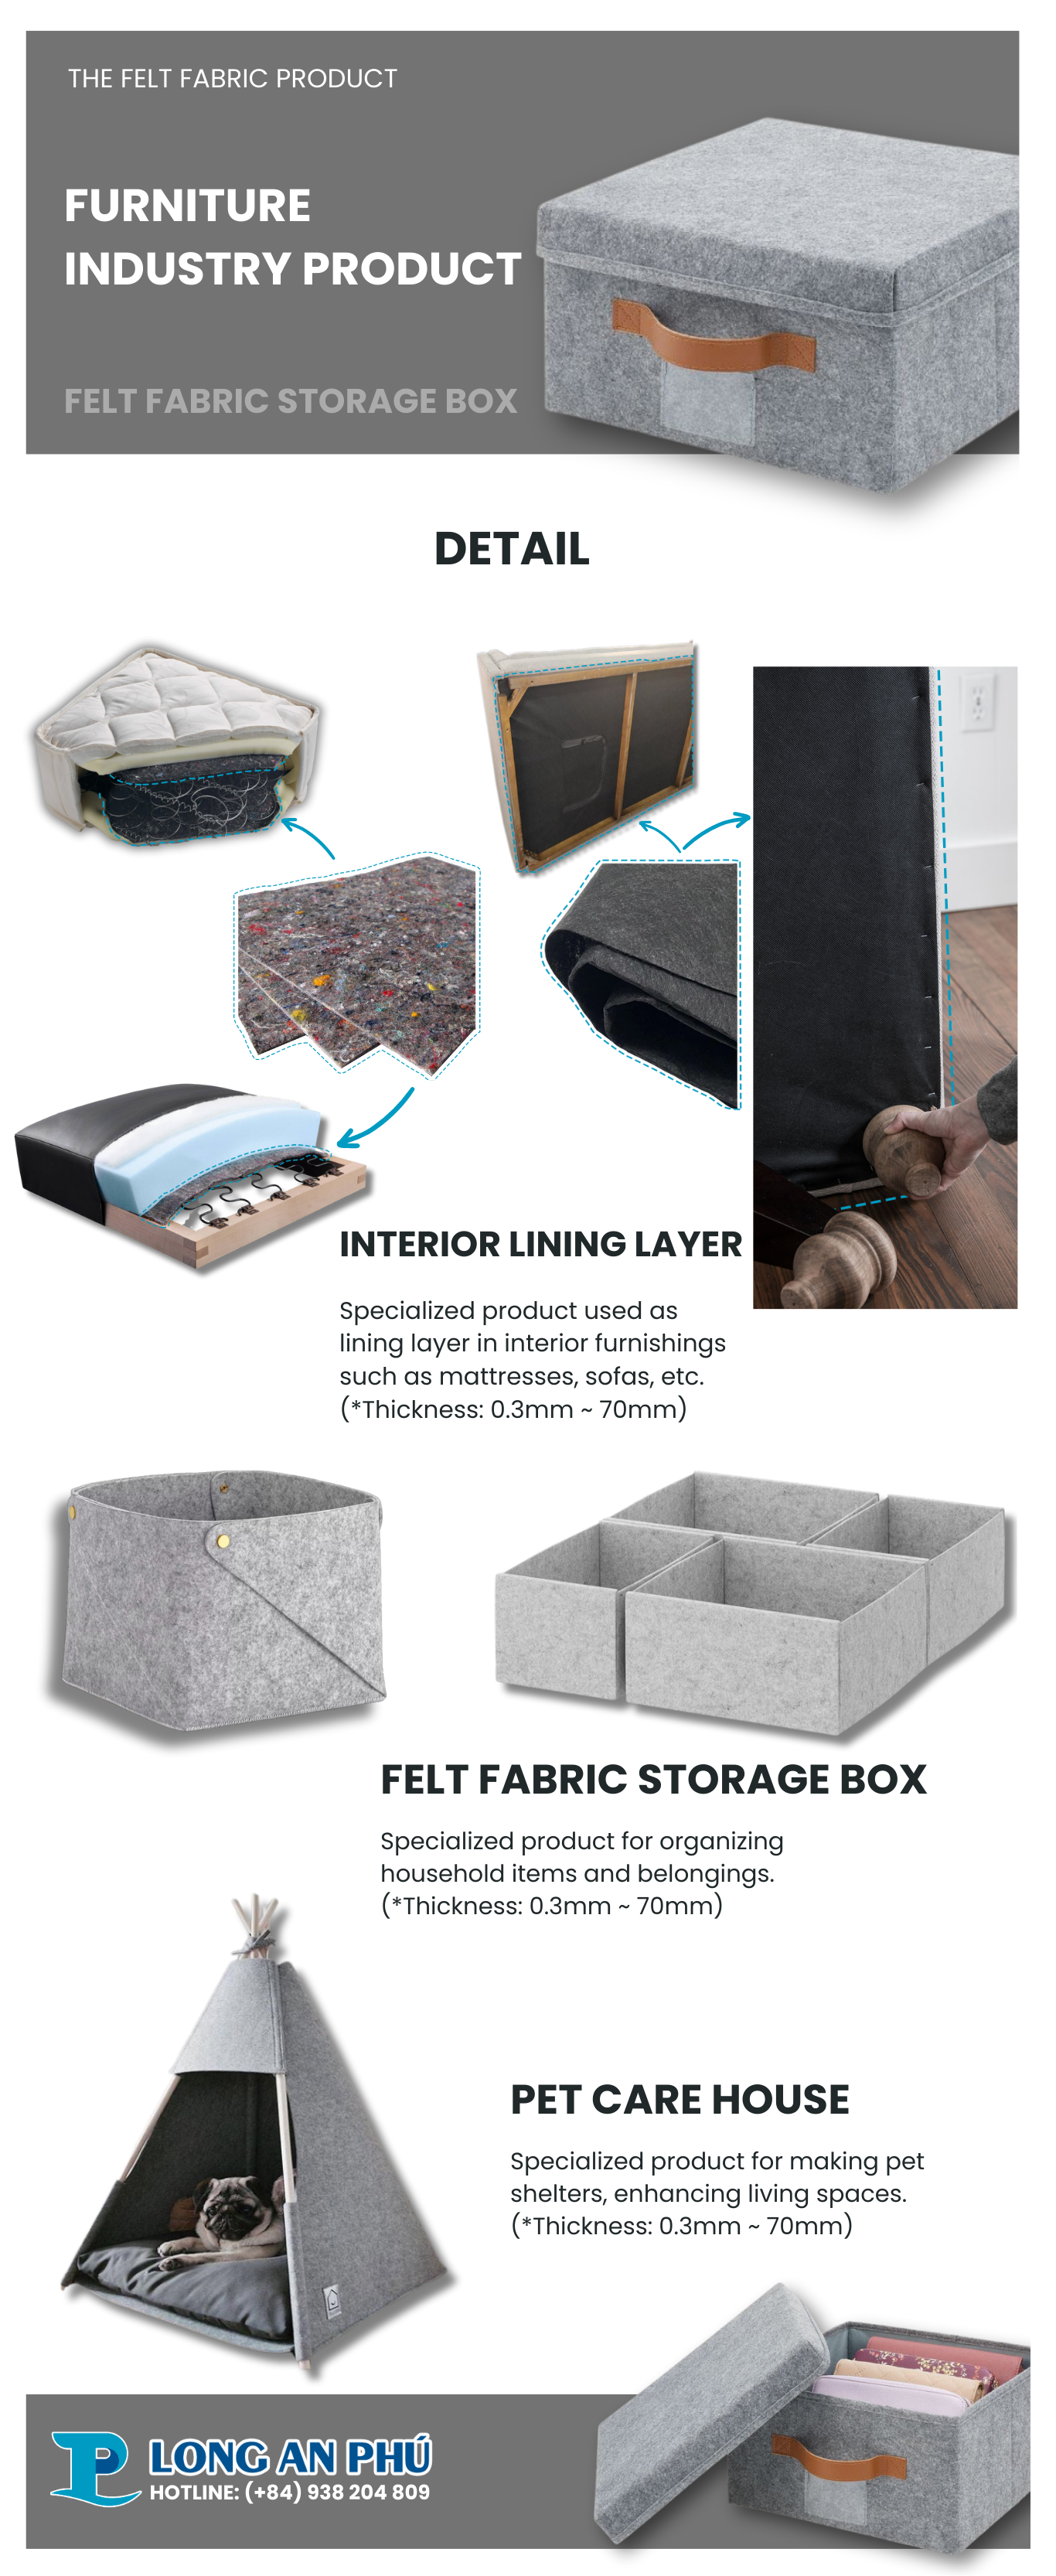 Felt Fabric Product - Furniture Industry